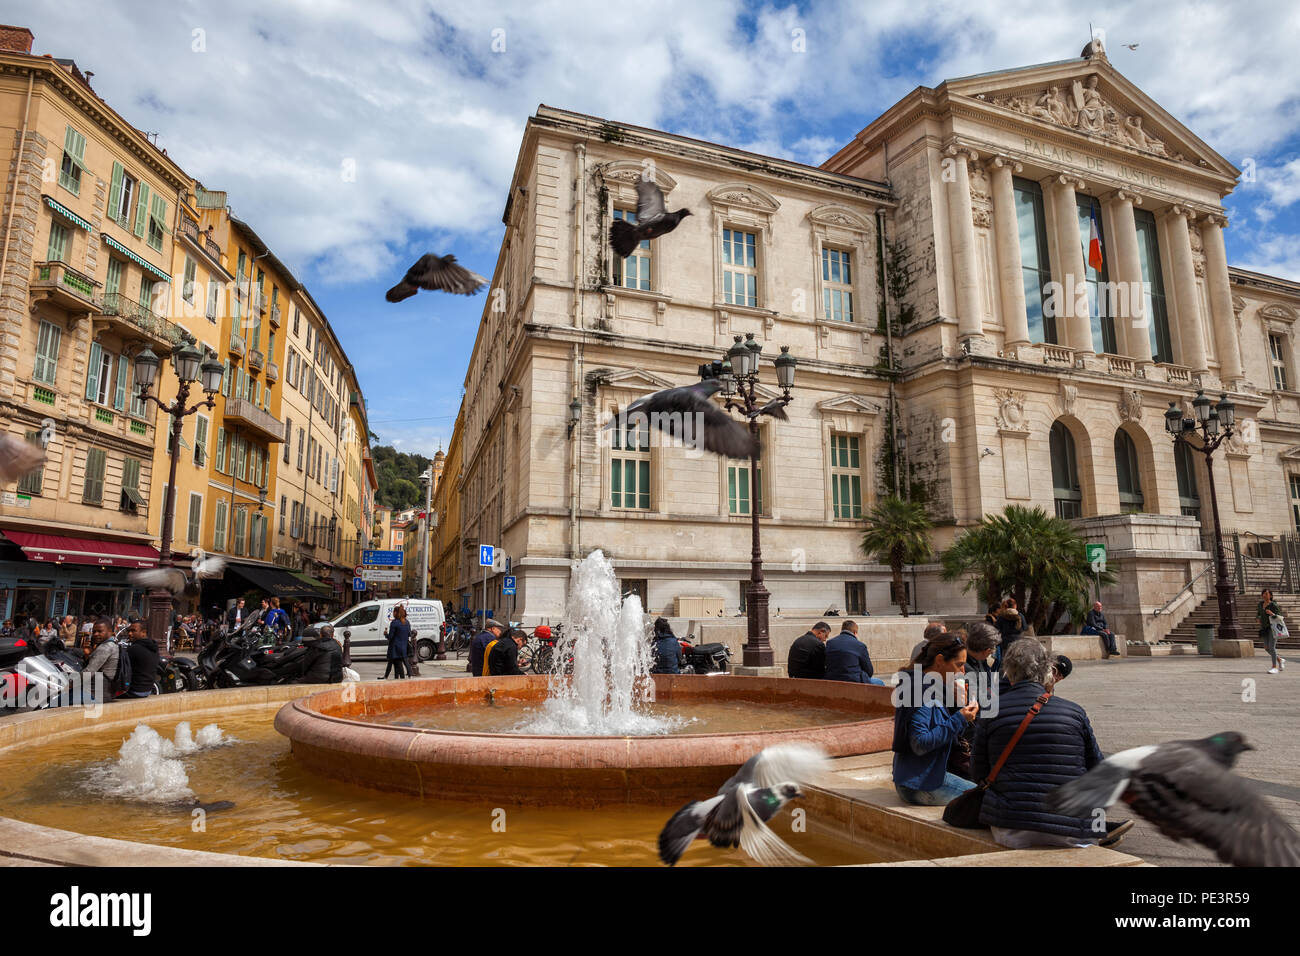 Frankreich, Nizza, Brunnen und Gerichtsgebäude am Place du Palais de Justice - Palast der Justiz Square Stockfoto